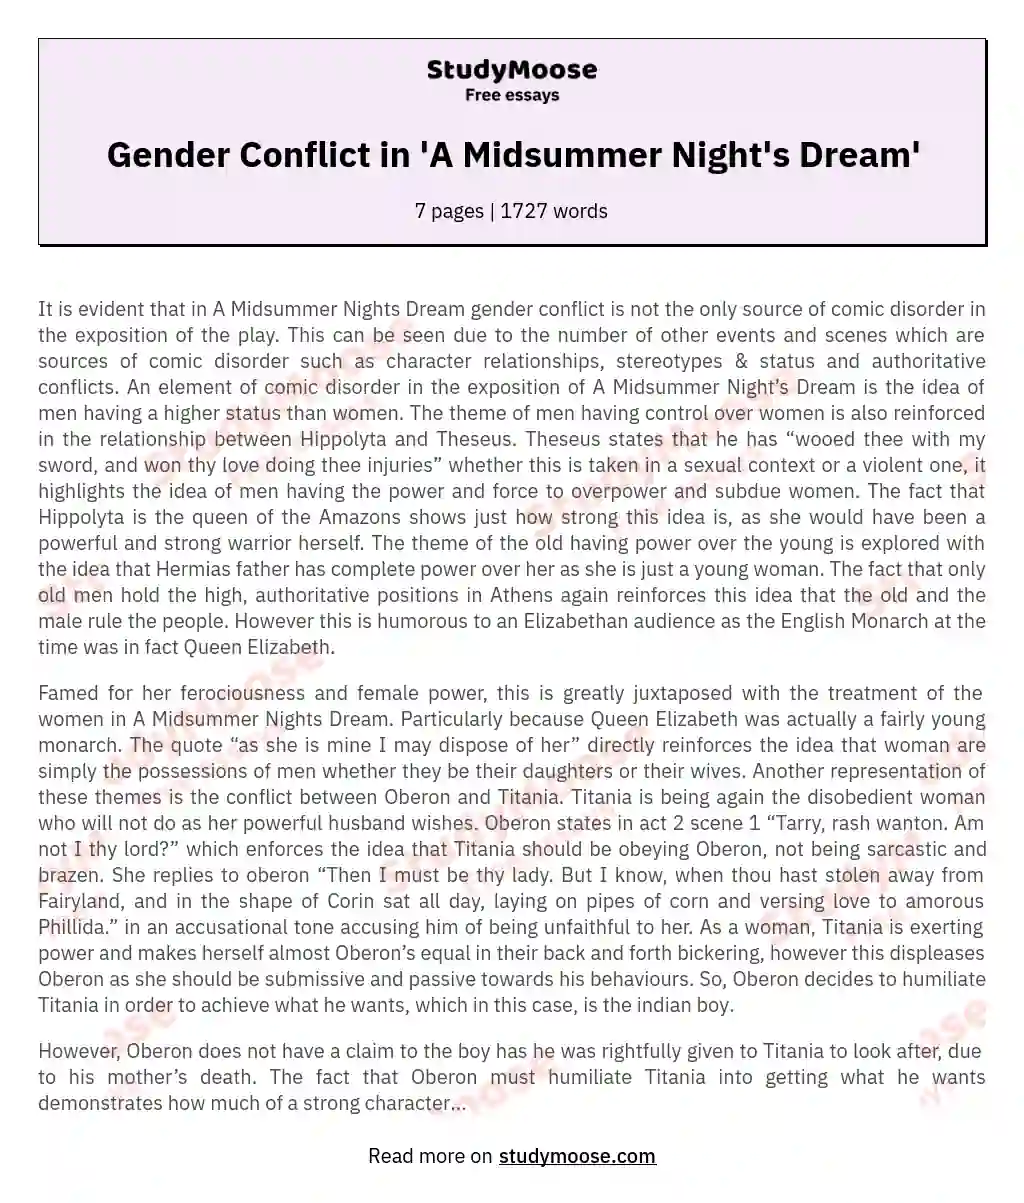 Gender Conflict in 'A Midsummer Night's Dream'